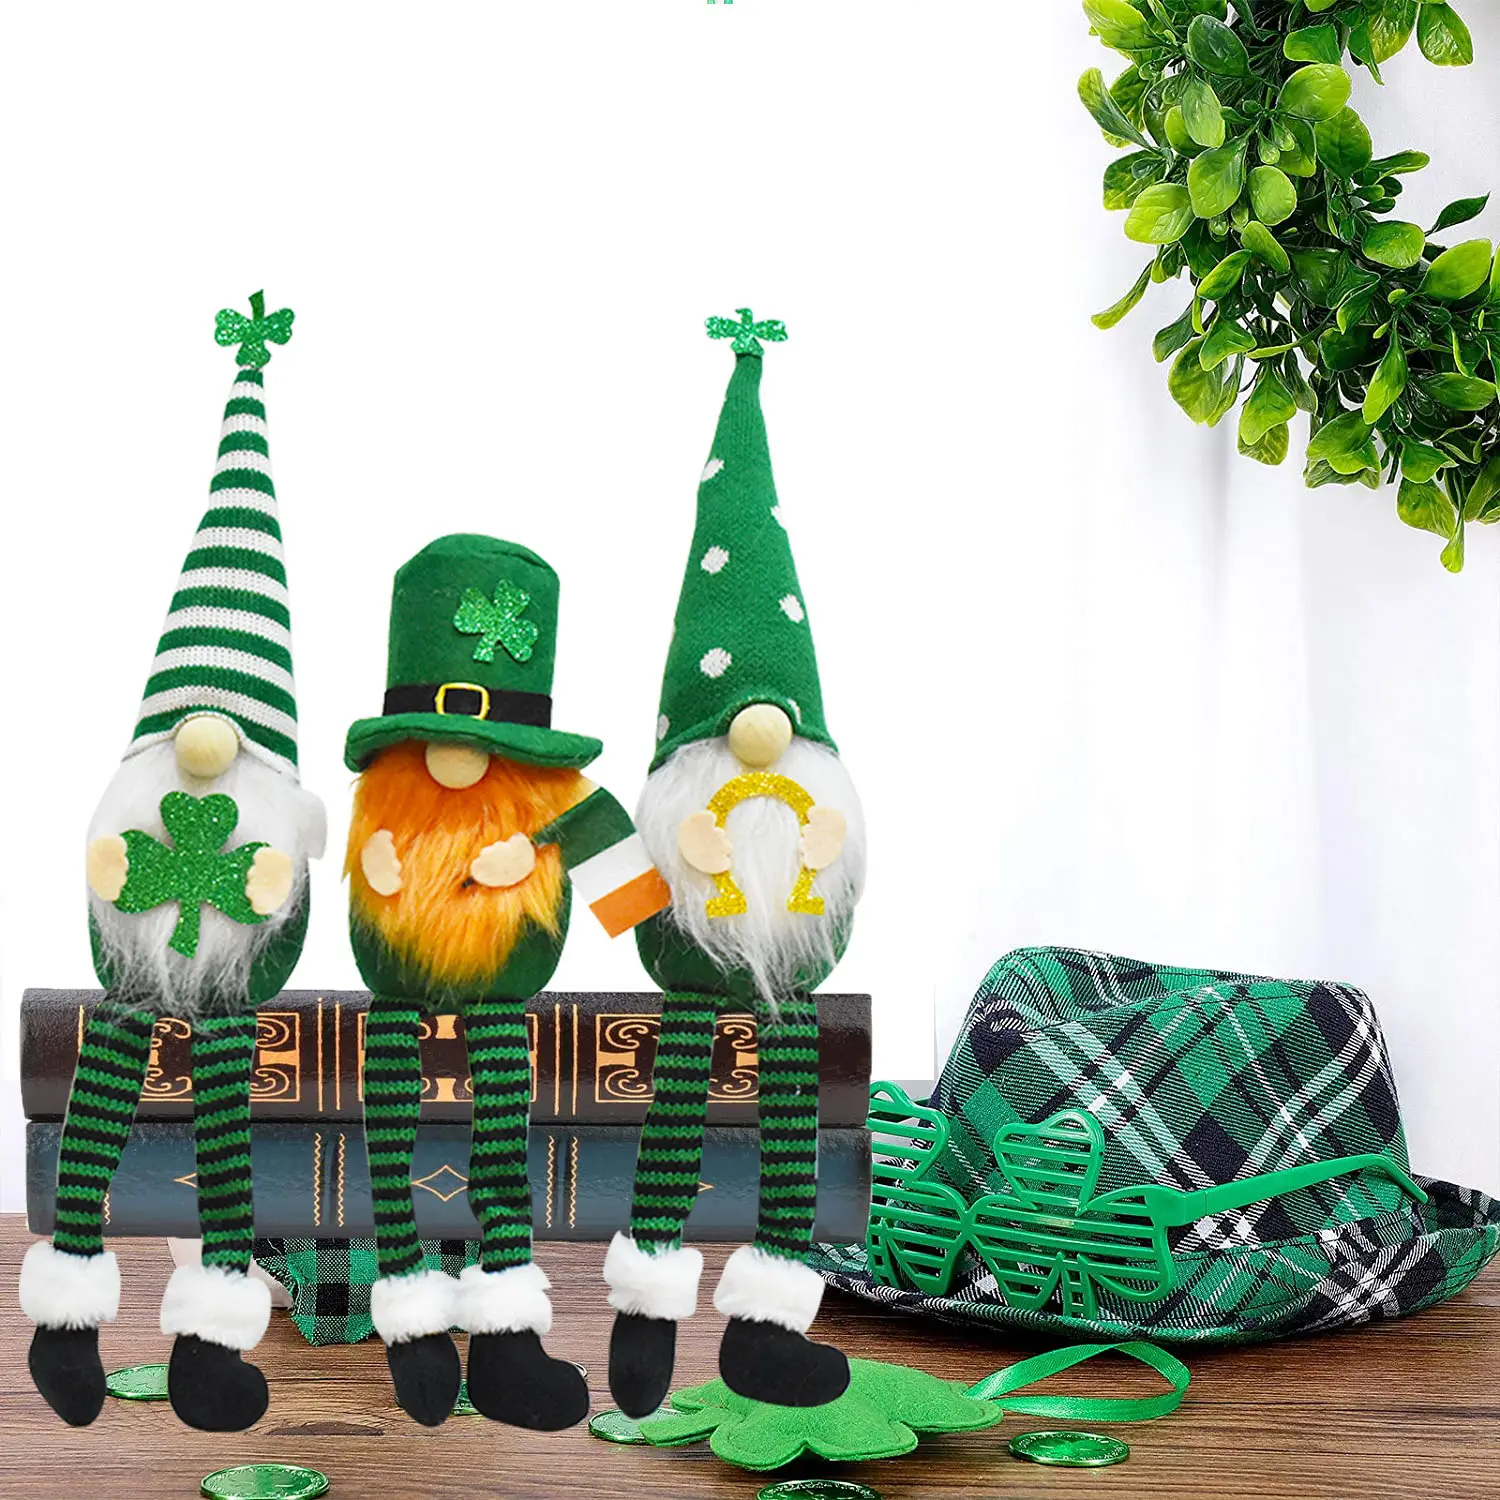 Custom other parties decorated green shamrock to plush midget Irish festival gnome